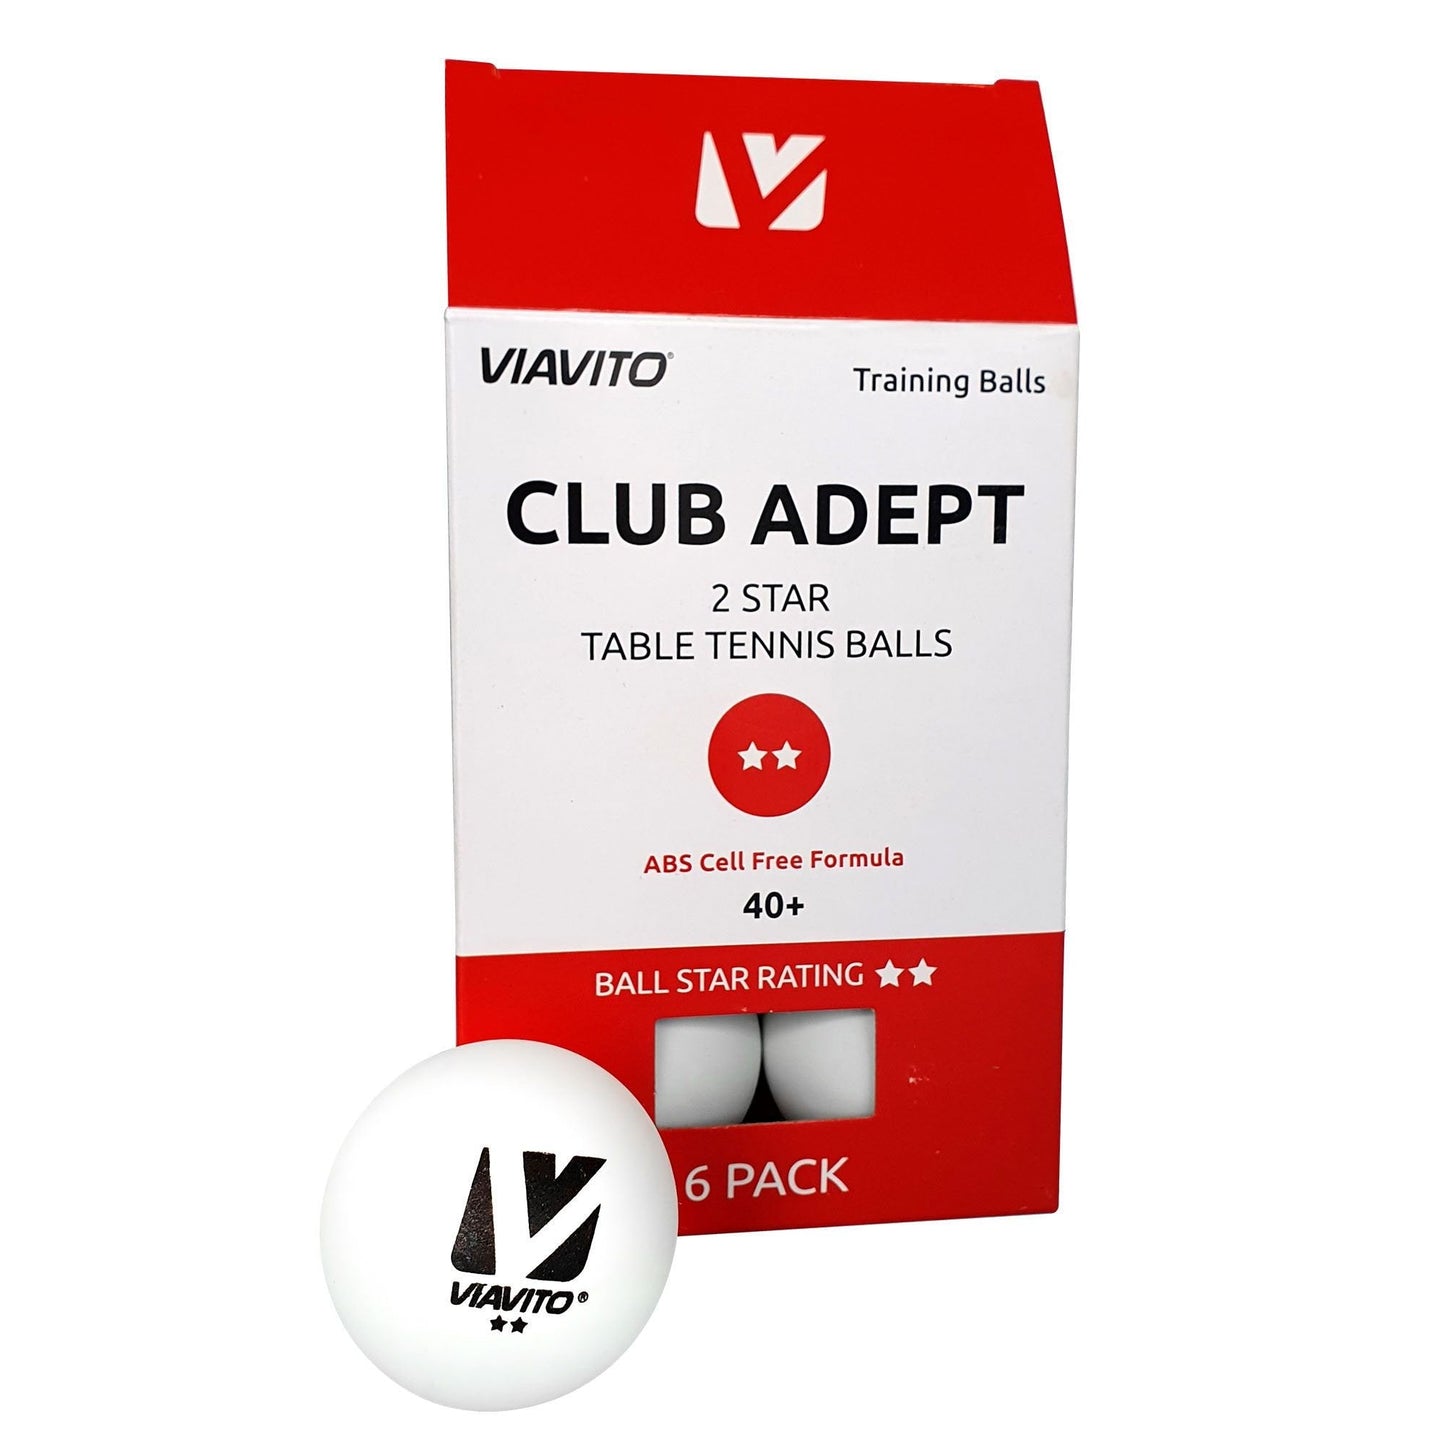 |Viavito Club Adept 2 Star Table Tennis Balls - Pack of 6 - New|